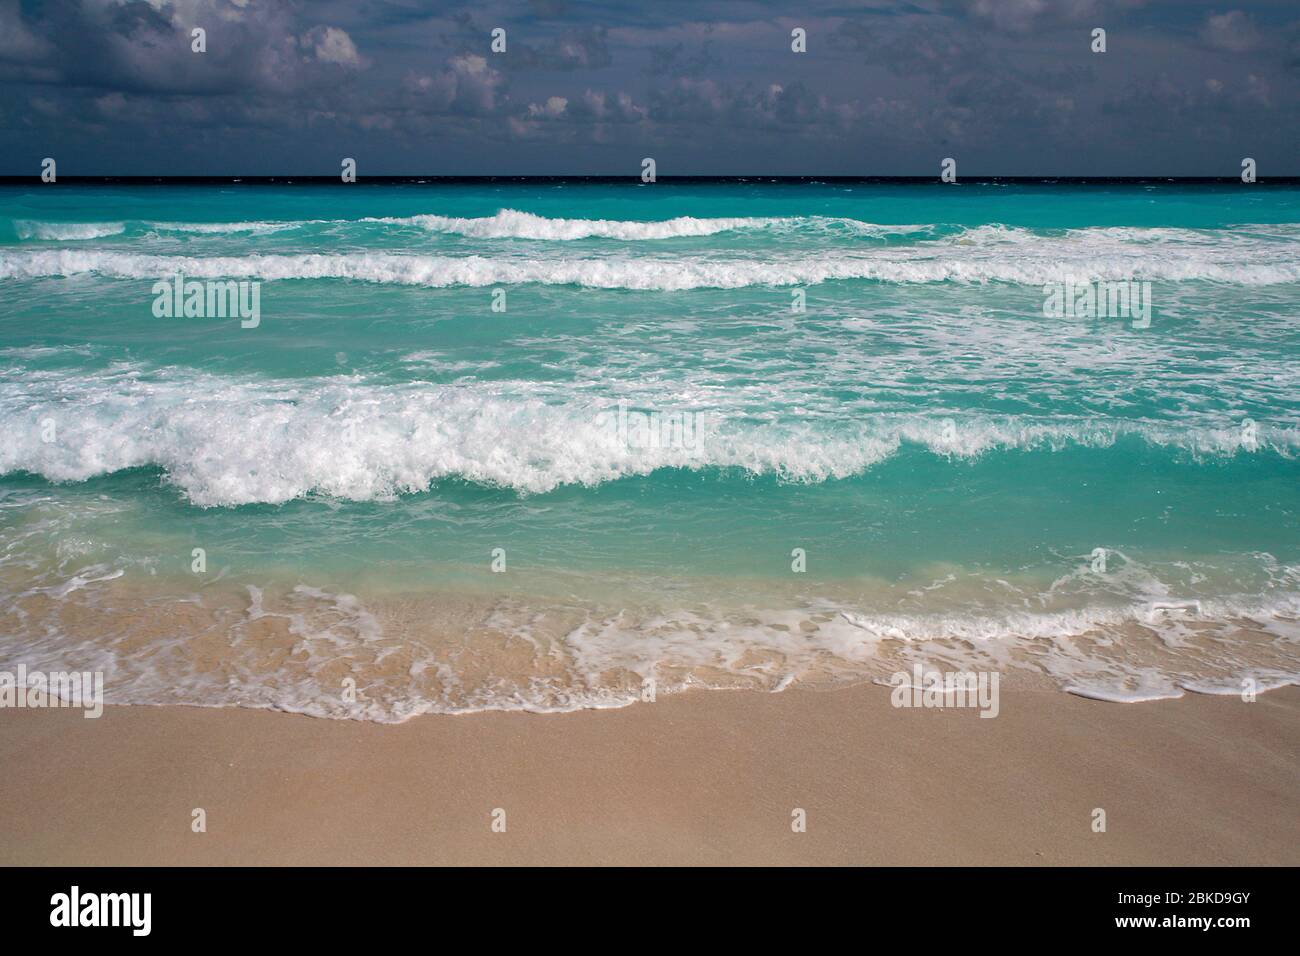 Turquoise sea waves crashing onto sandy beach Stock Photo